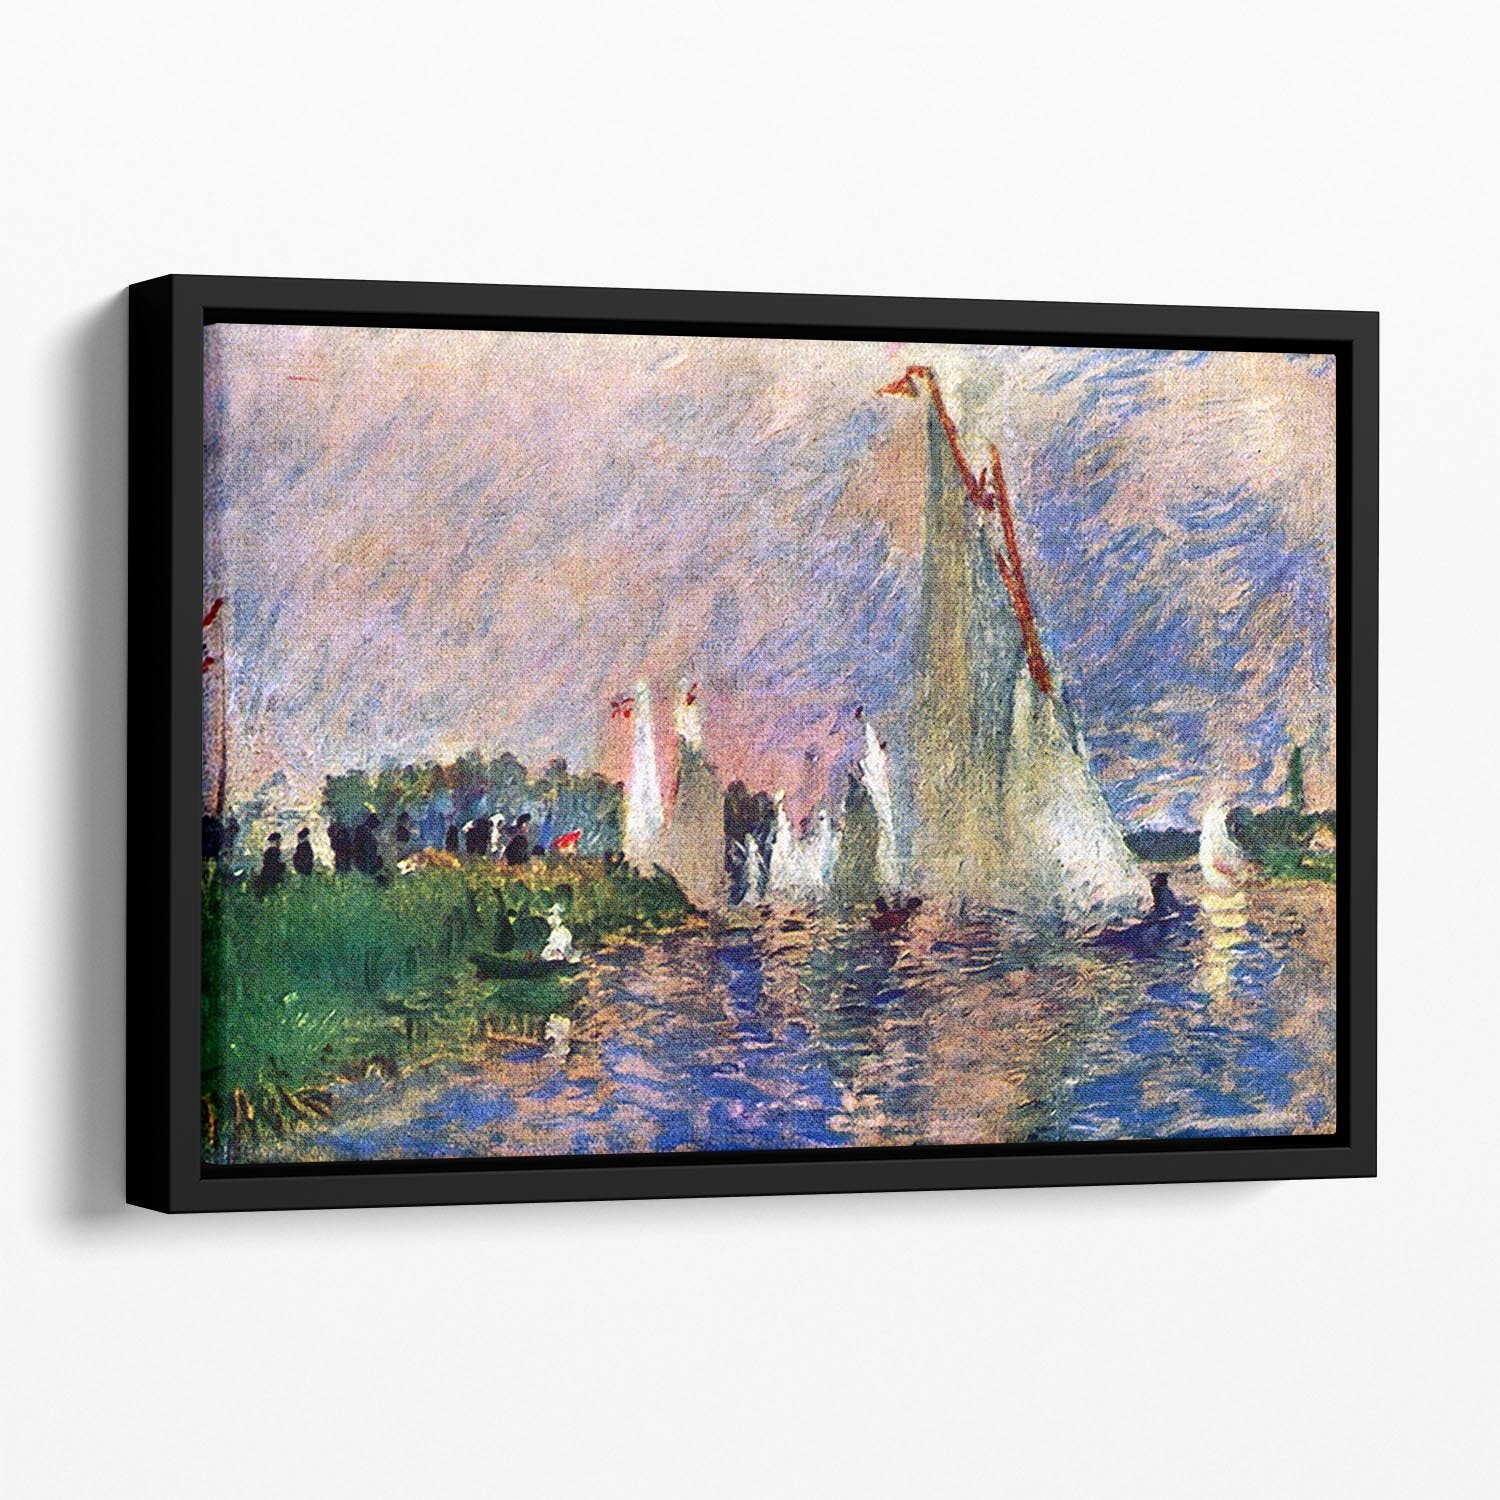 Regatta in Argenteuil by Renoir Floating Framed Canvas